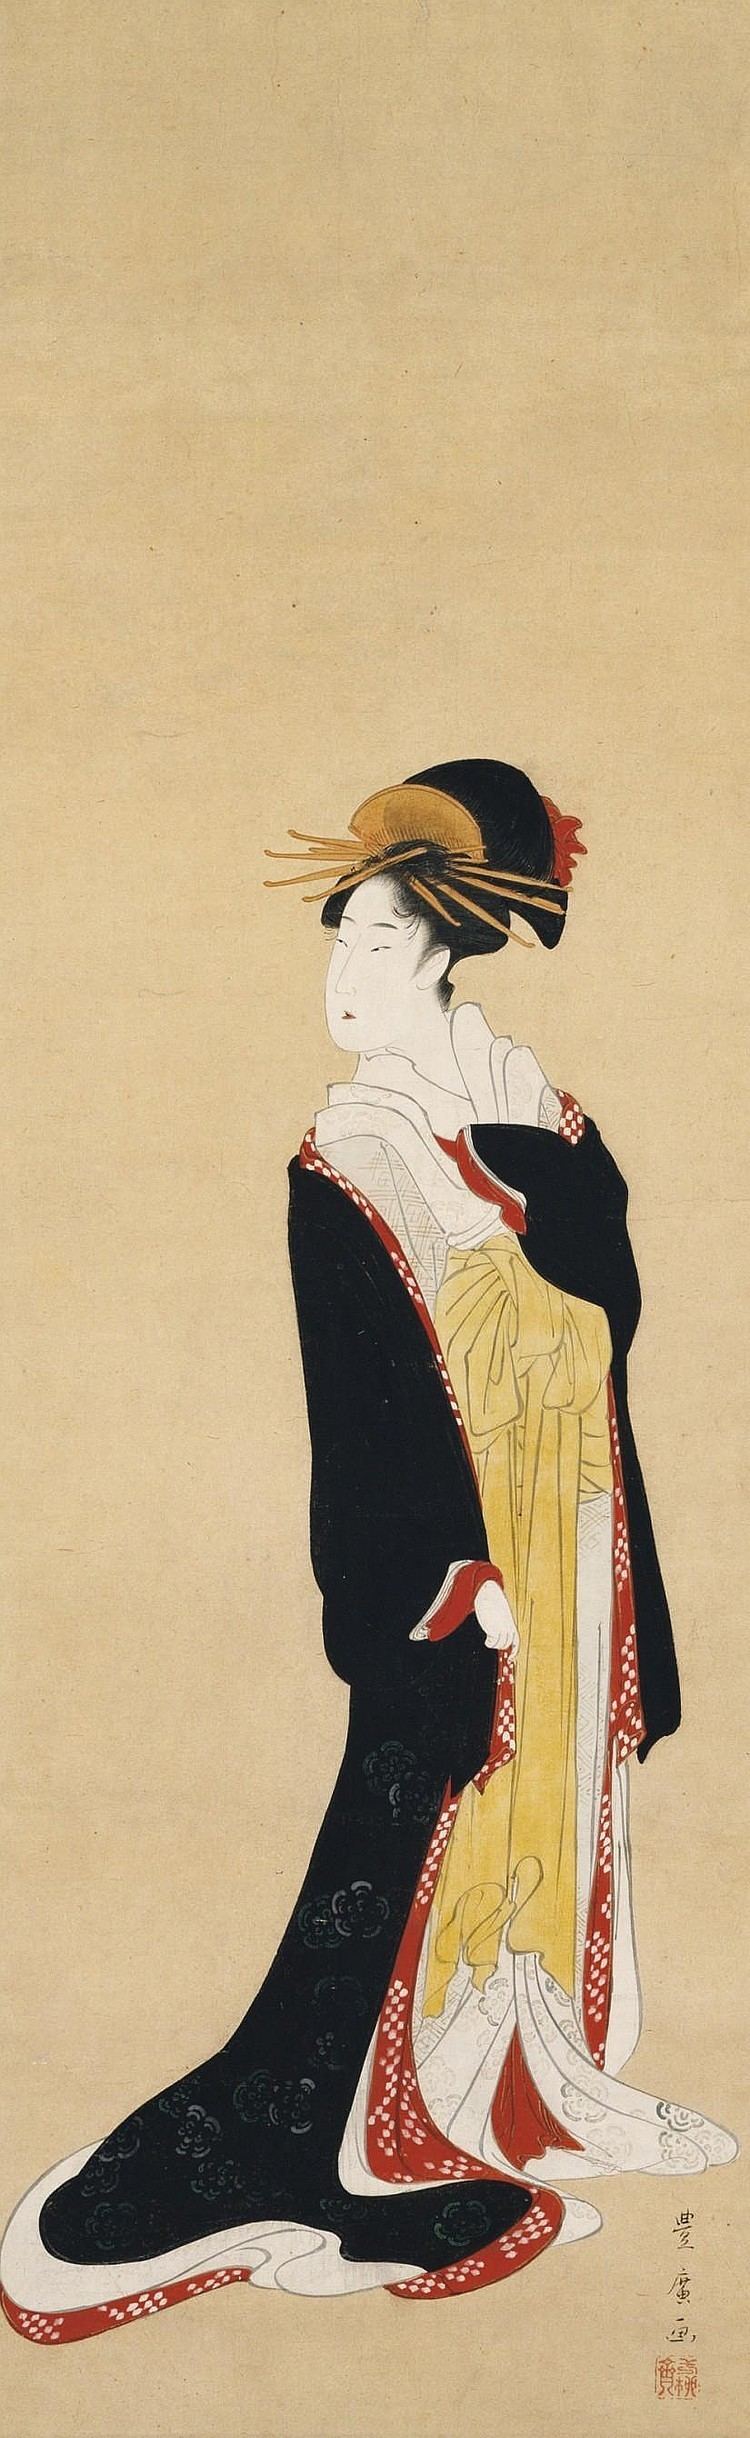 Toyohiro Utagawa Toyohiro Works on Sale at Auction Biography